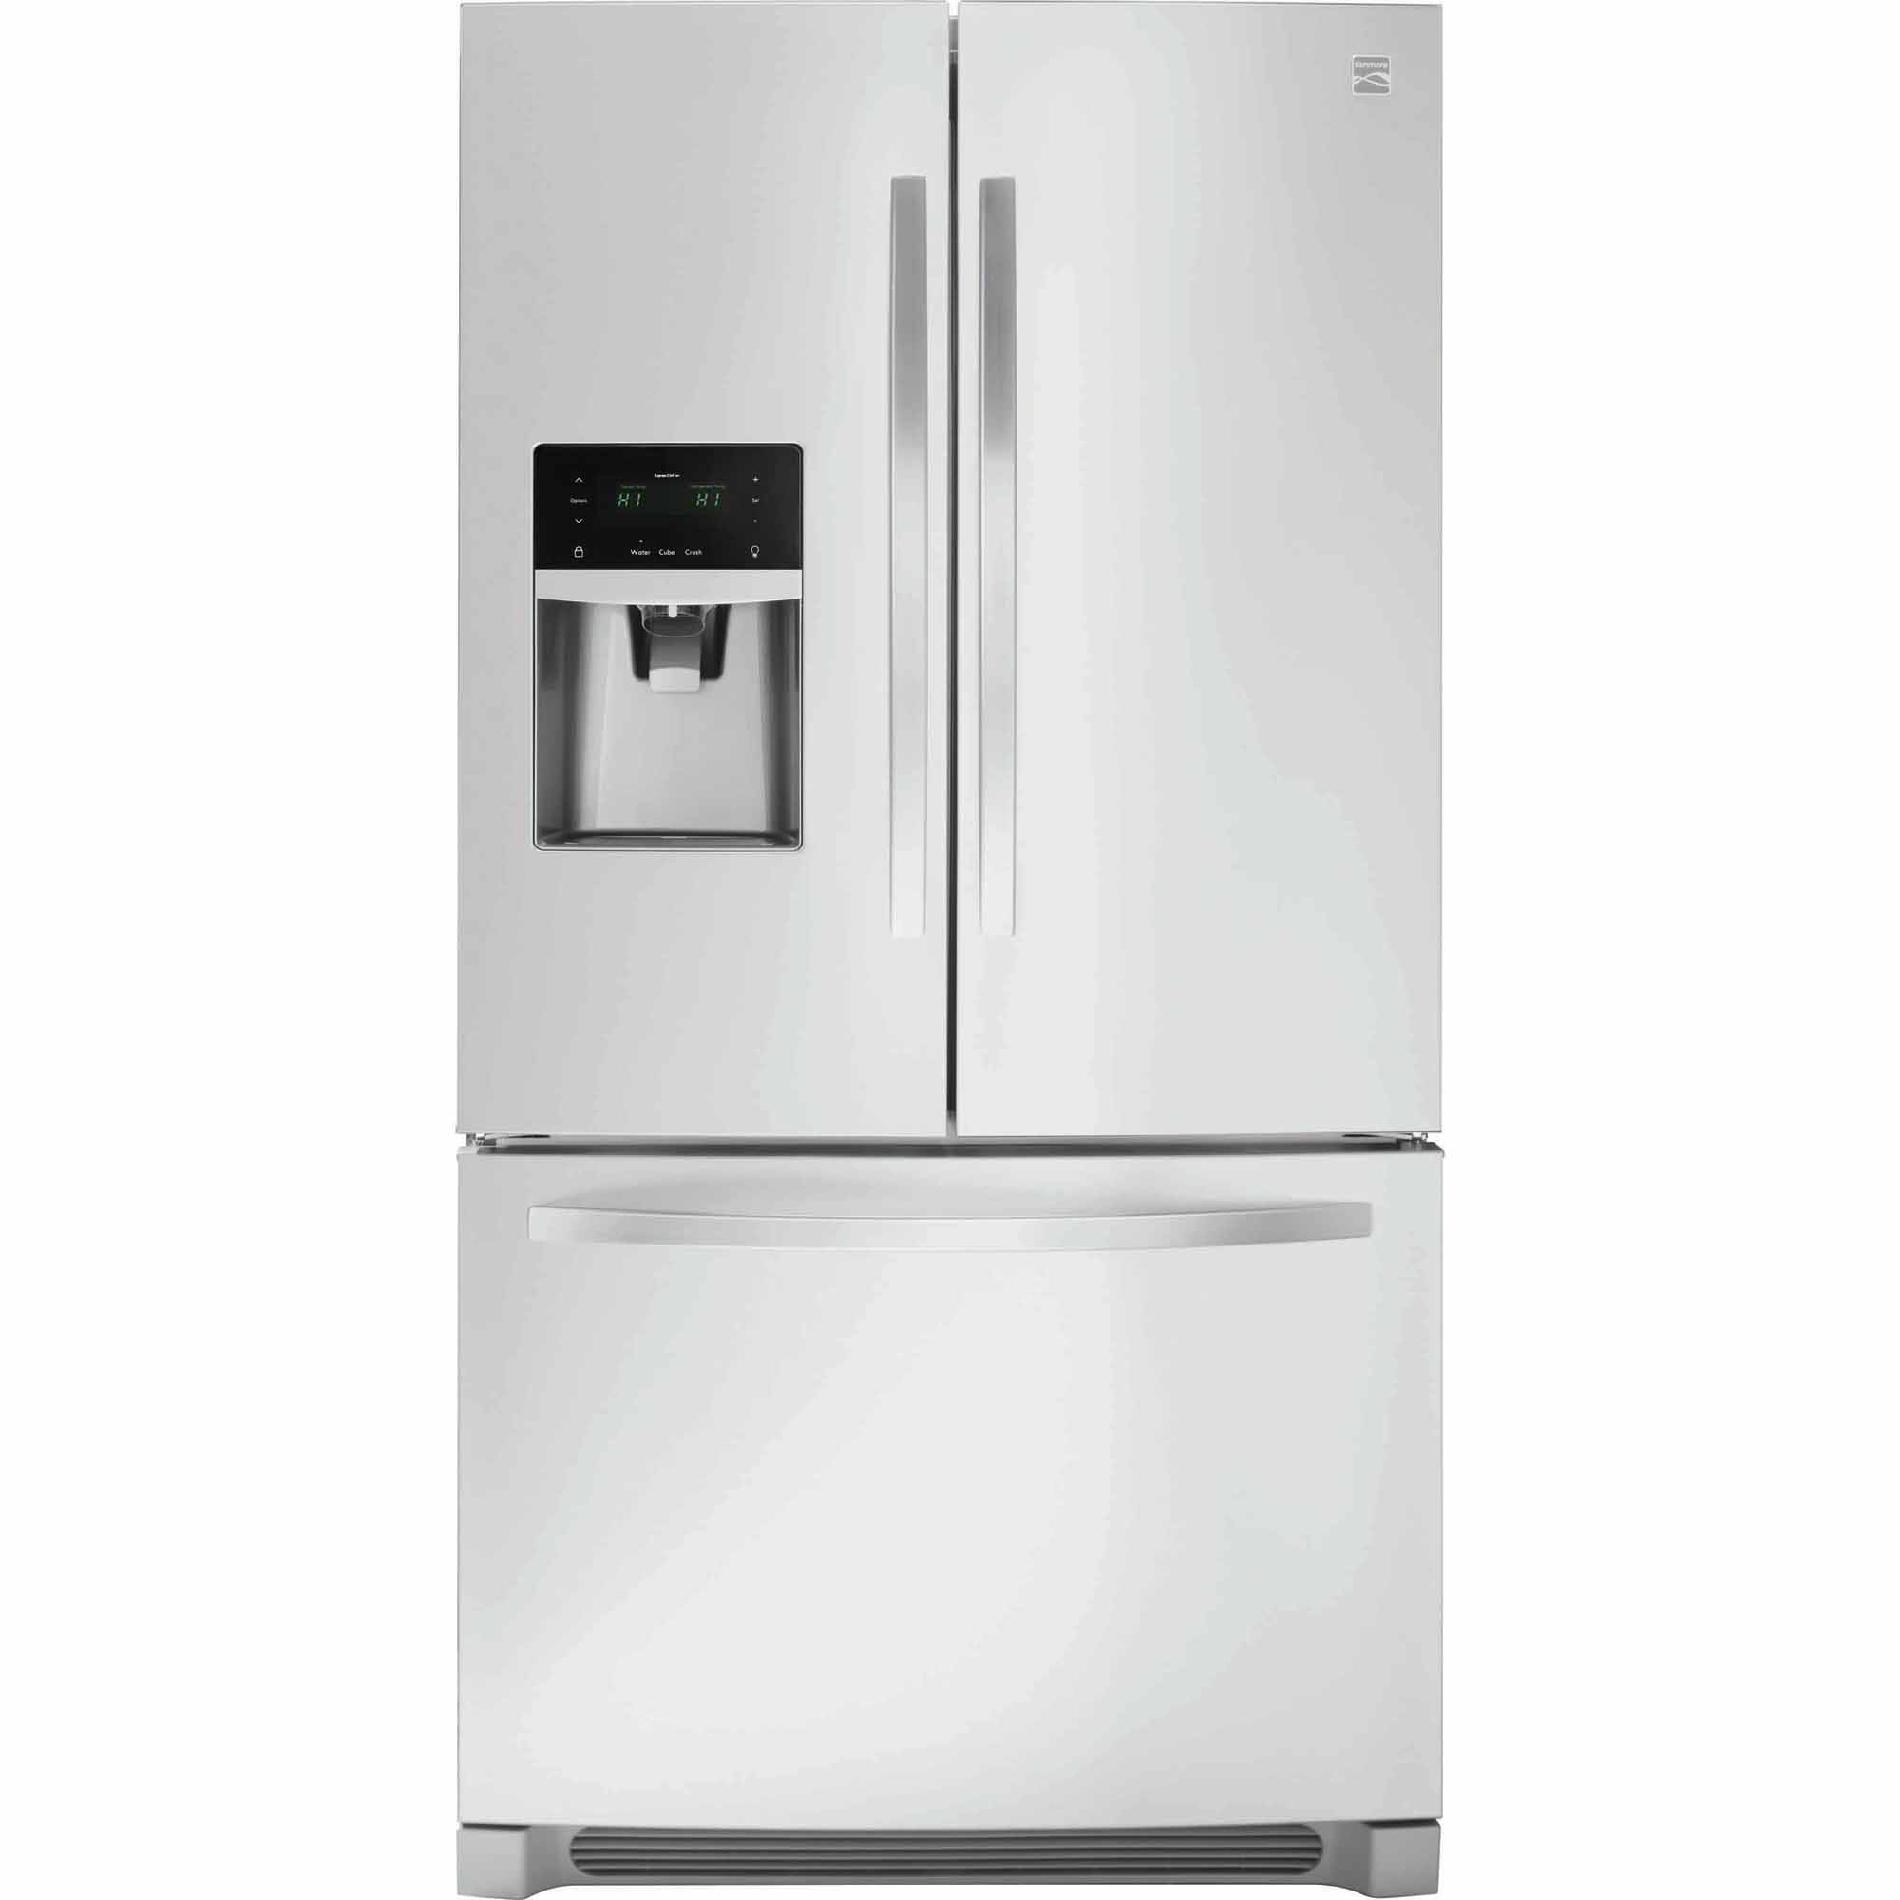 Kenmore 70343 27.2 cu. ft. French Door Refrigerator in Stainless Steel